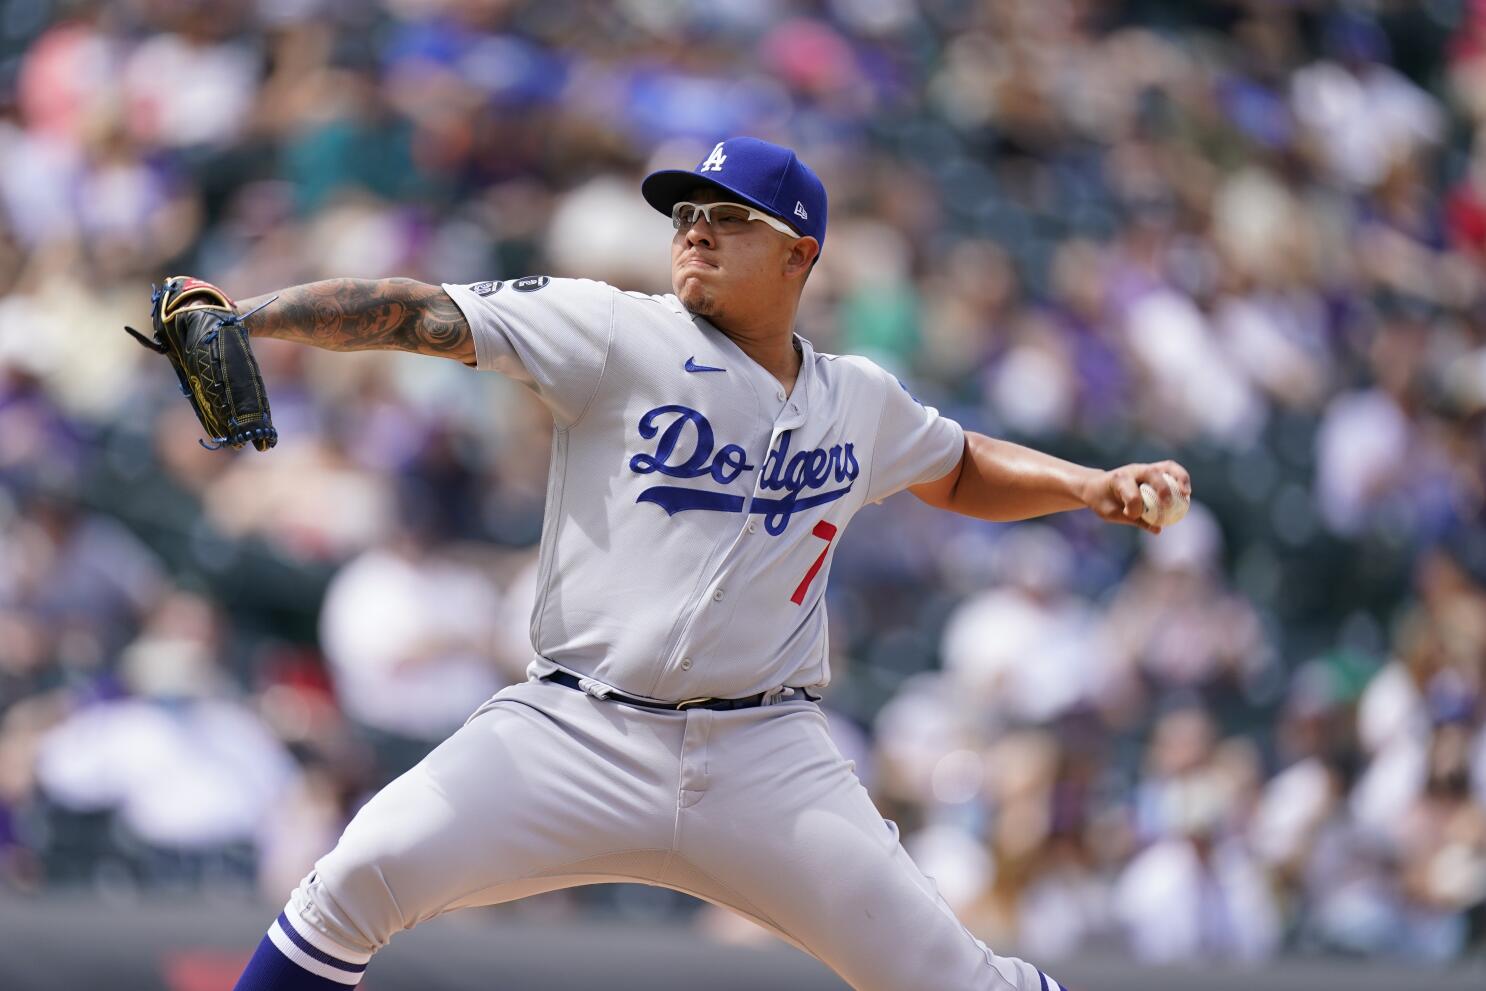 Dodgers Rookie Gavin Lux Recalls Kirk Gibson's Walk-Off Home Run